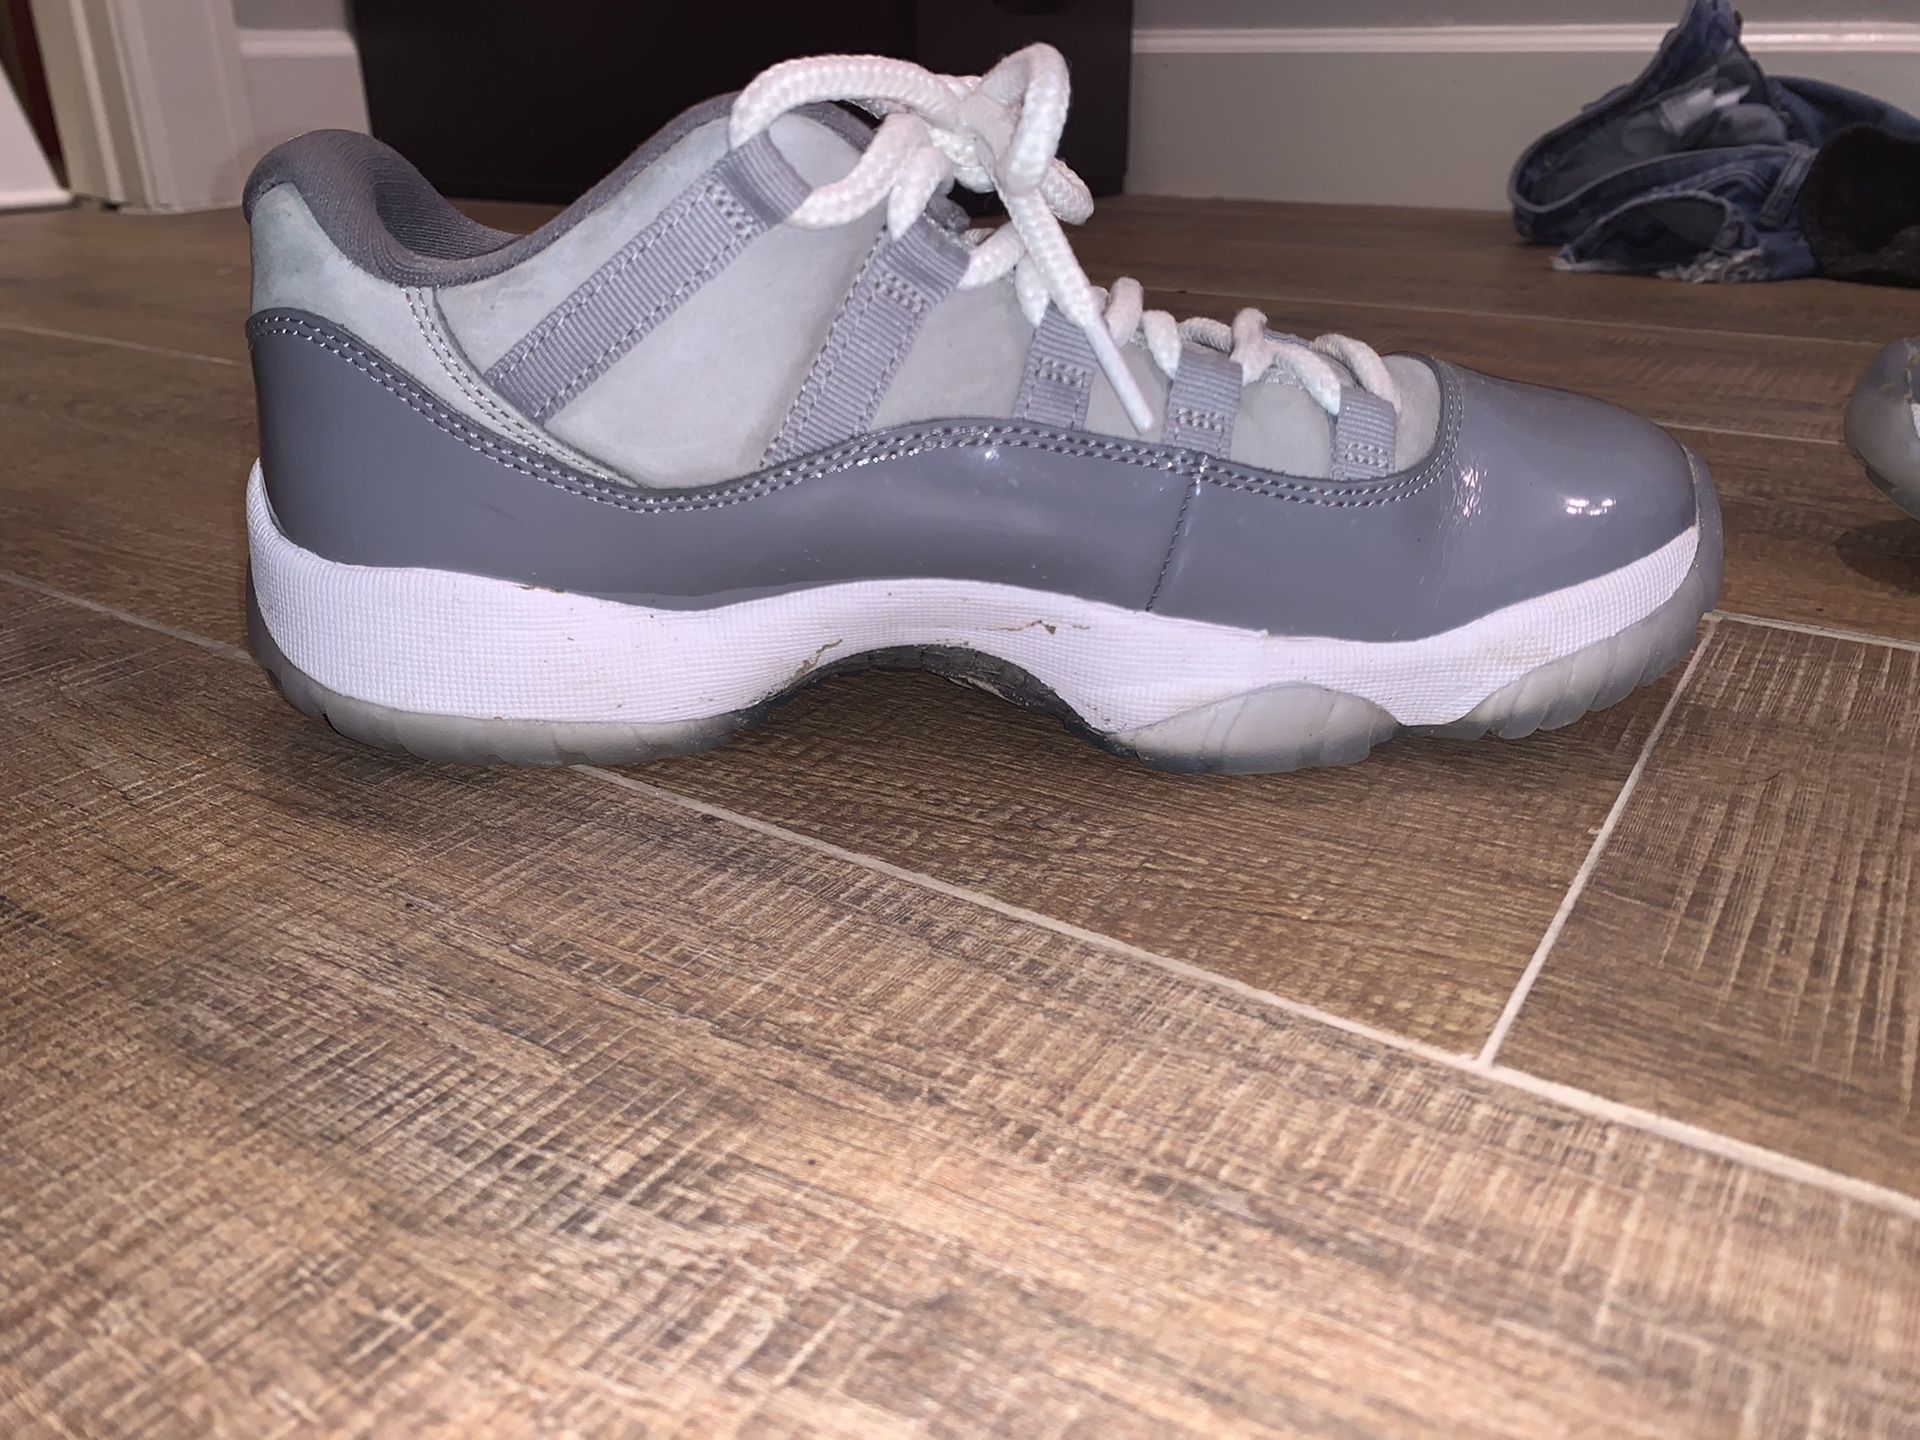 Jordan 11 cool grey (size 7.5 men’s)